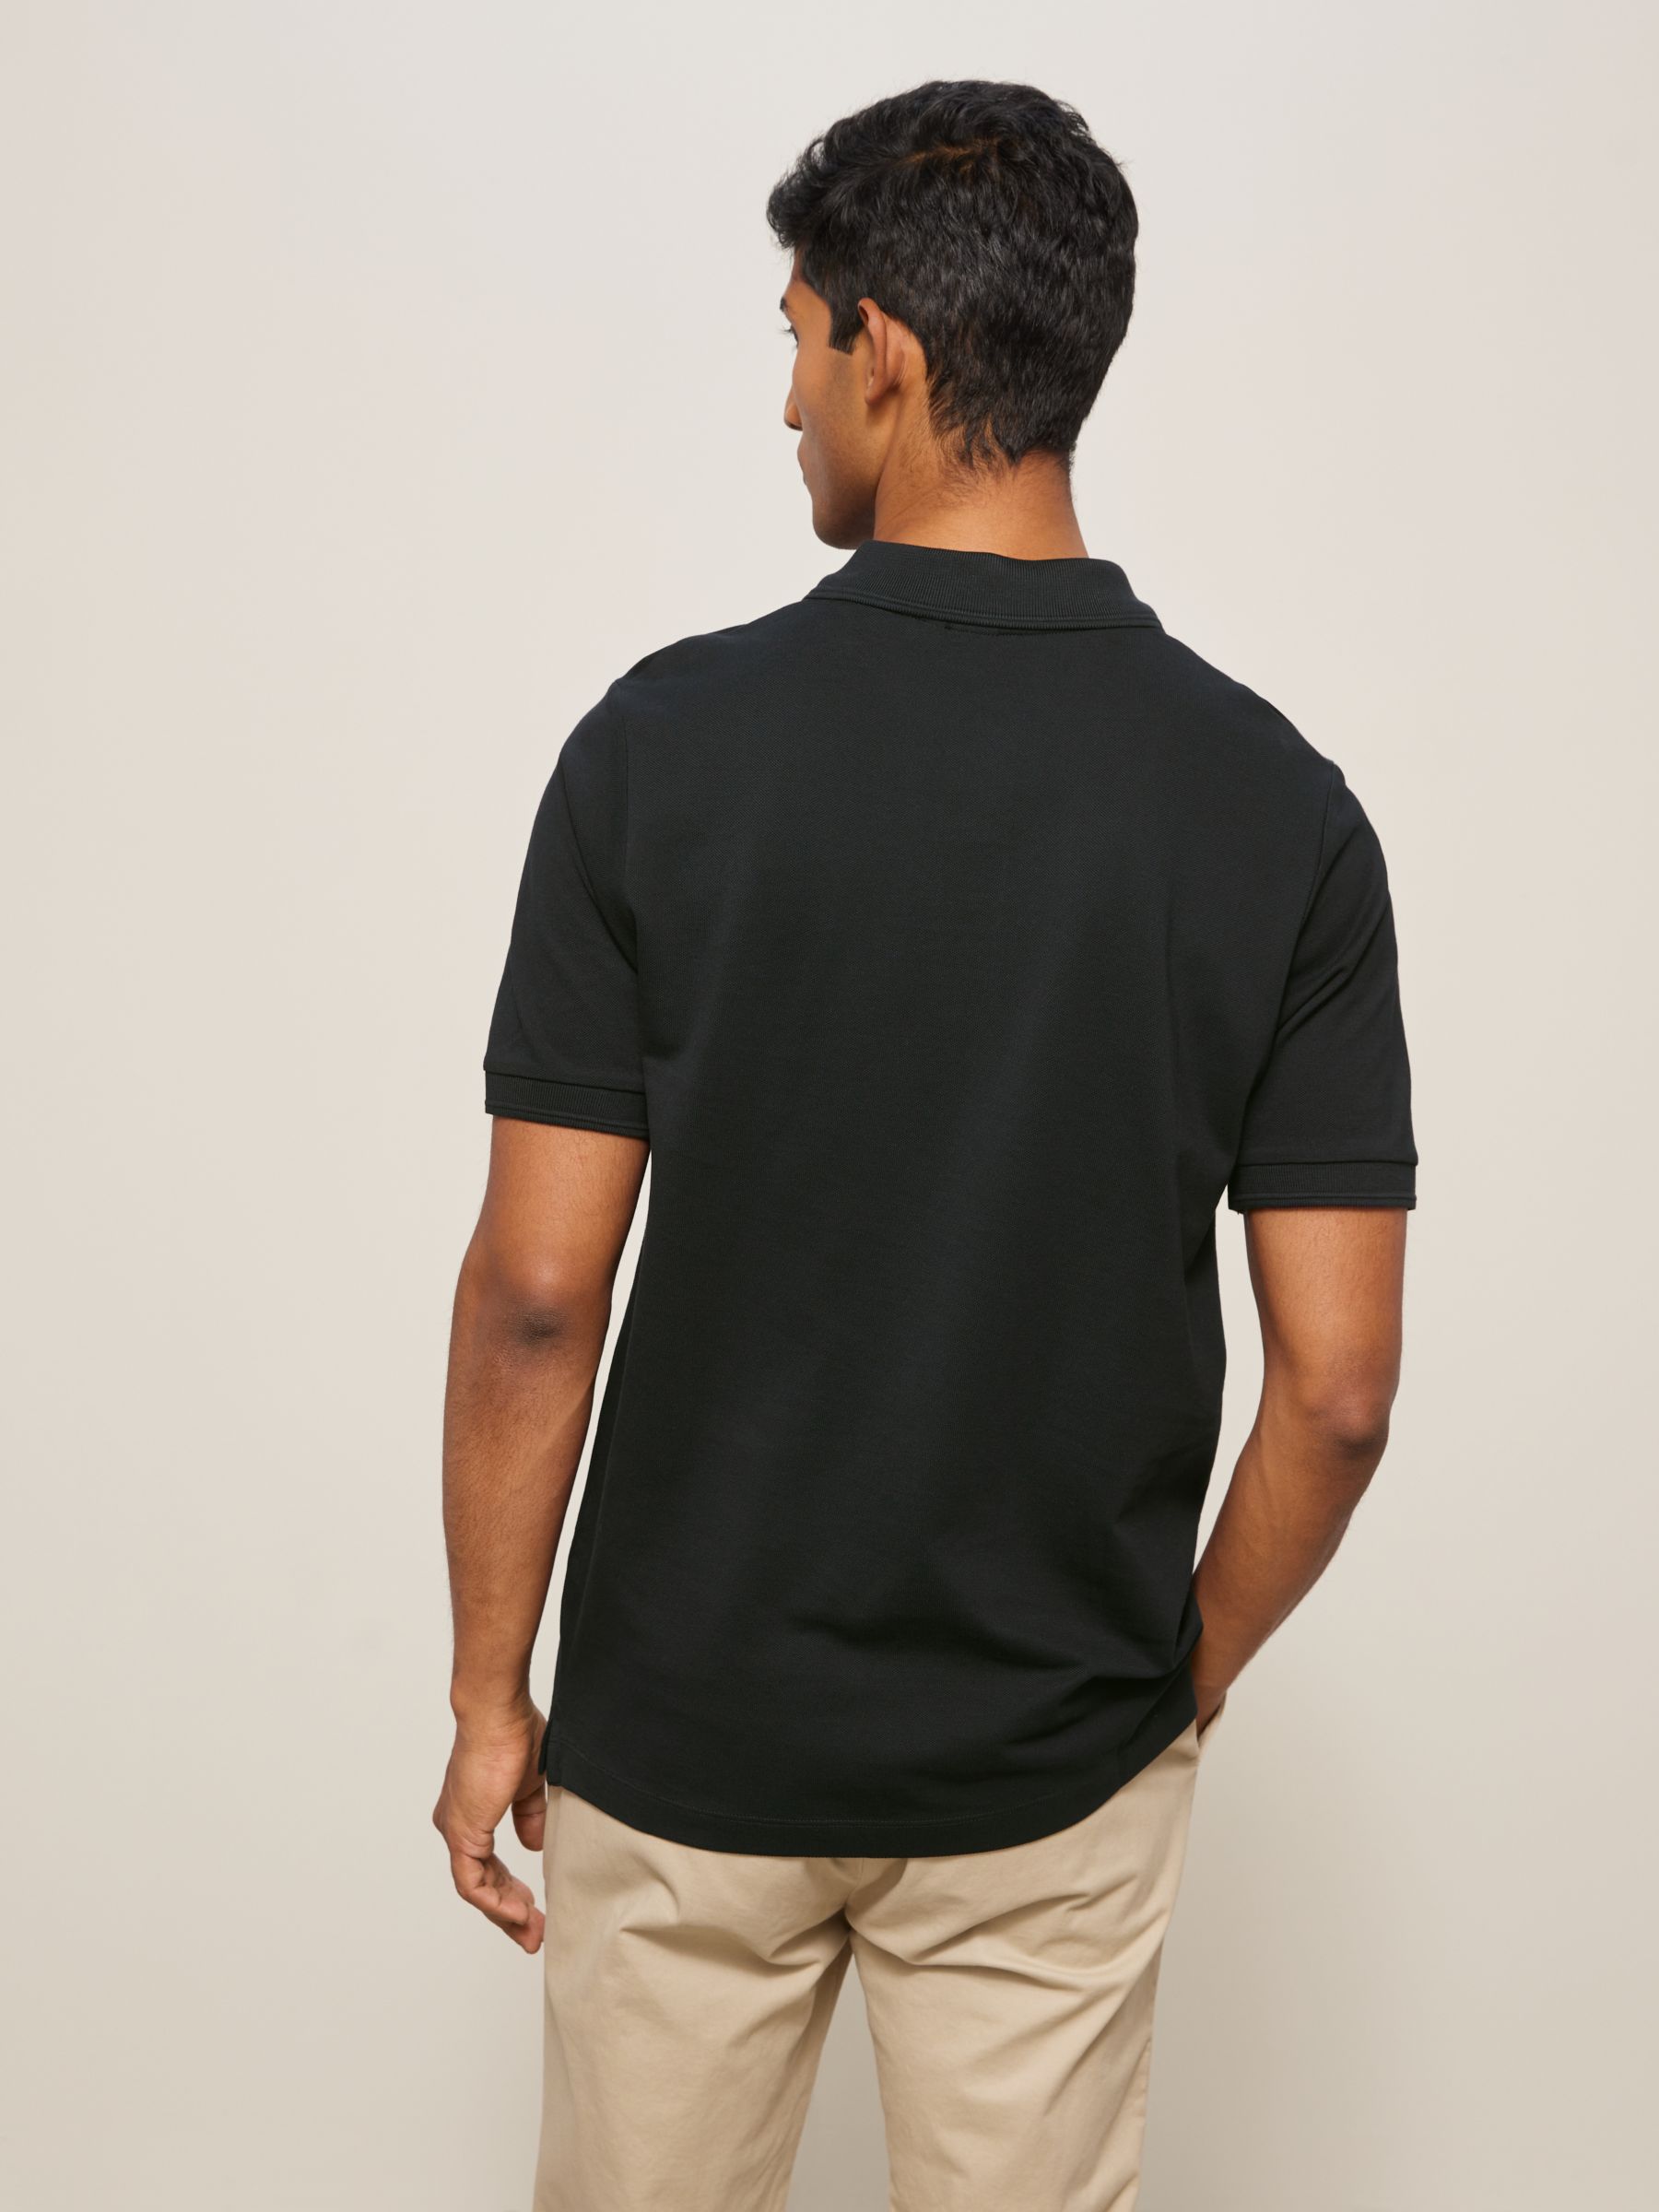 John Lewis Supima Cotton Jersey Polo Shirt, Black, S